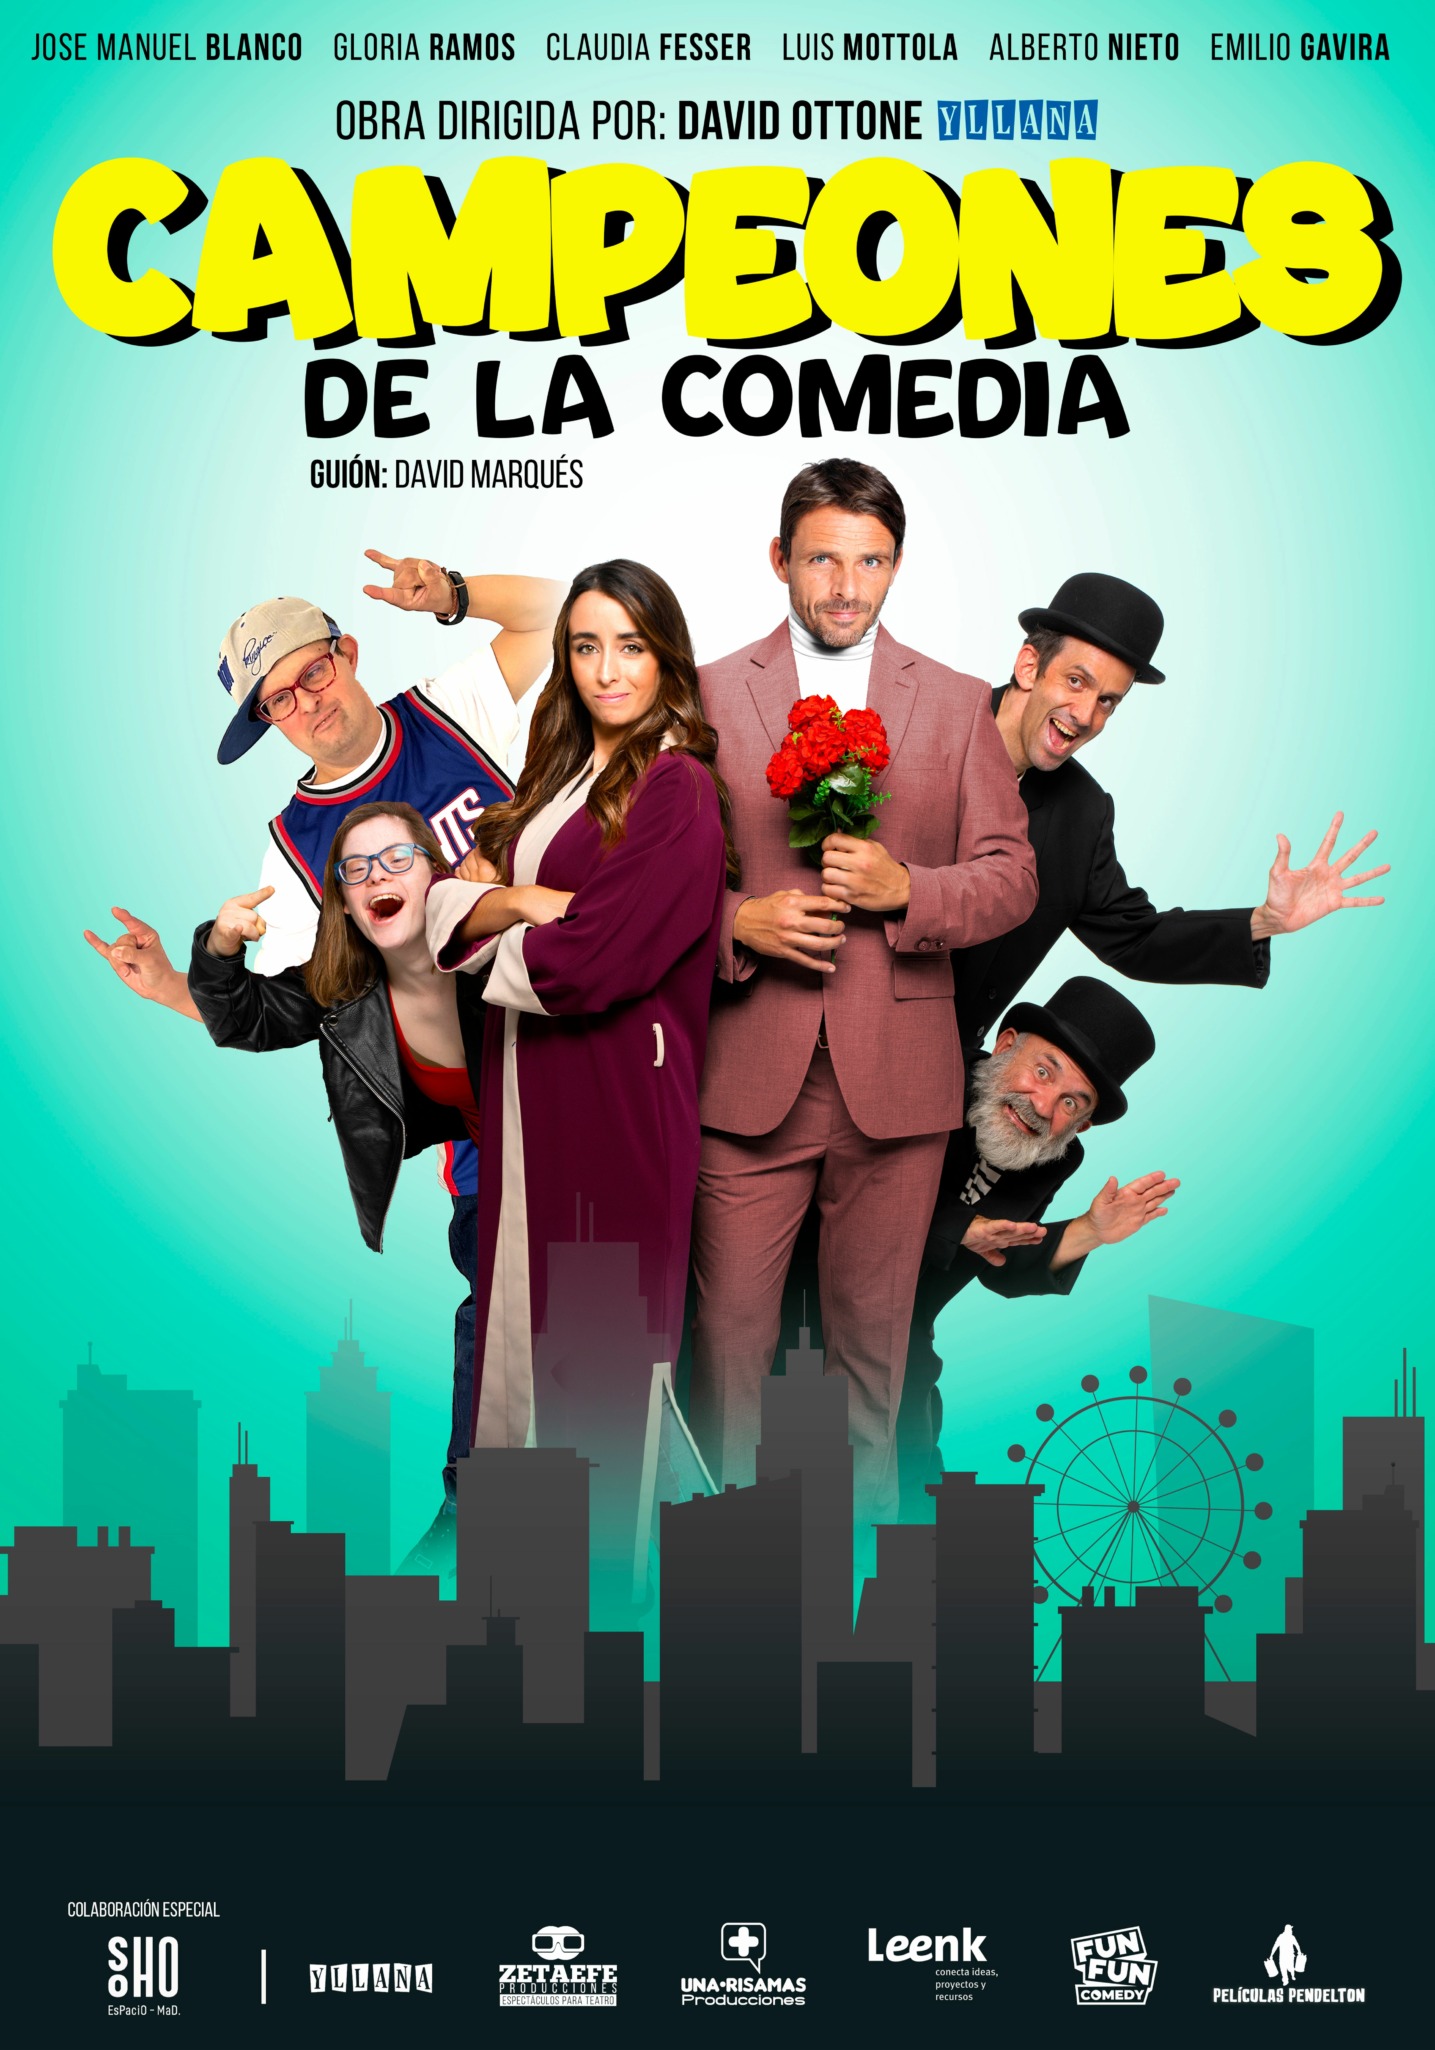 Campeones de la Comedia desembarca en Aranjuez